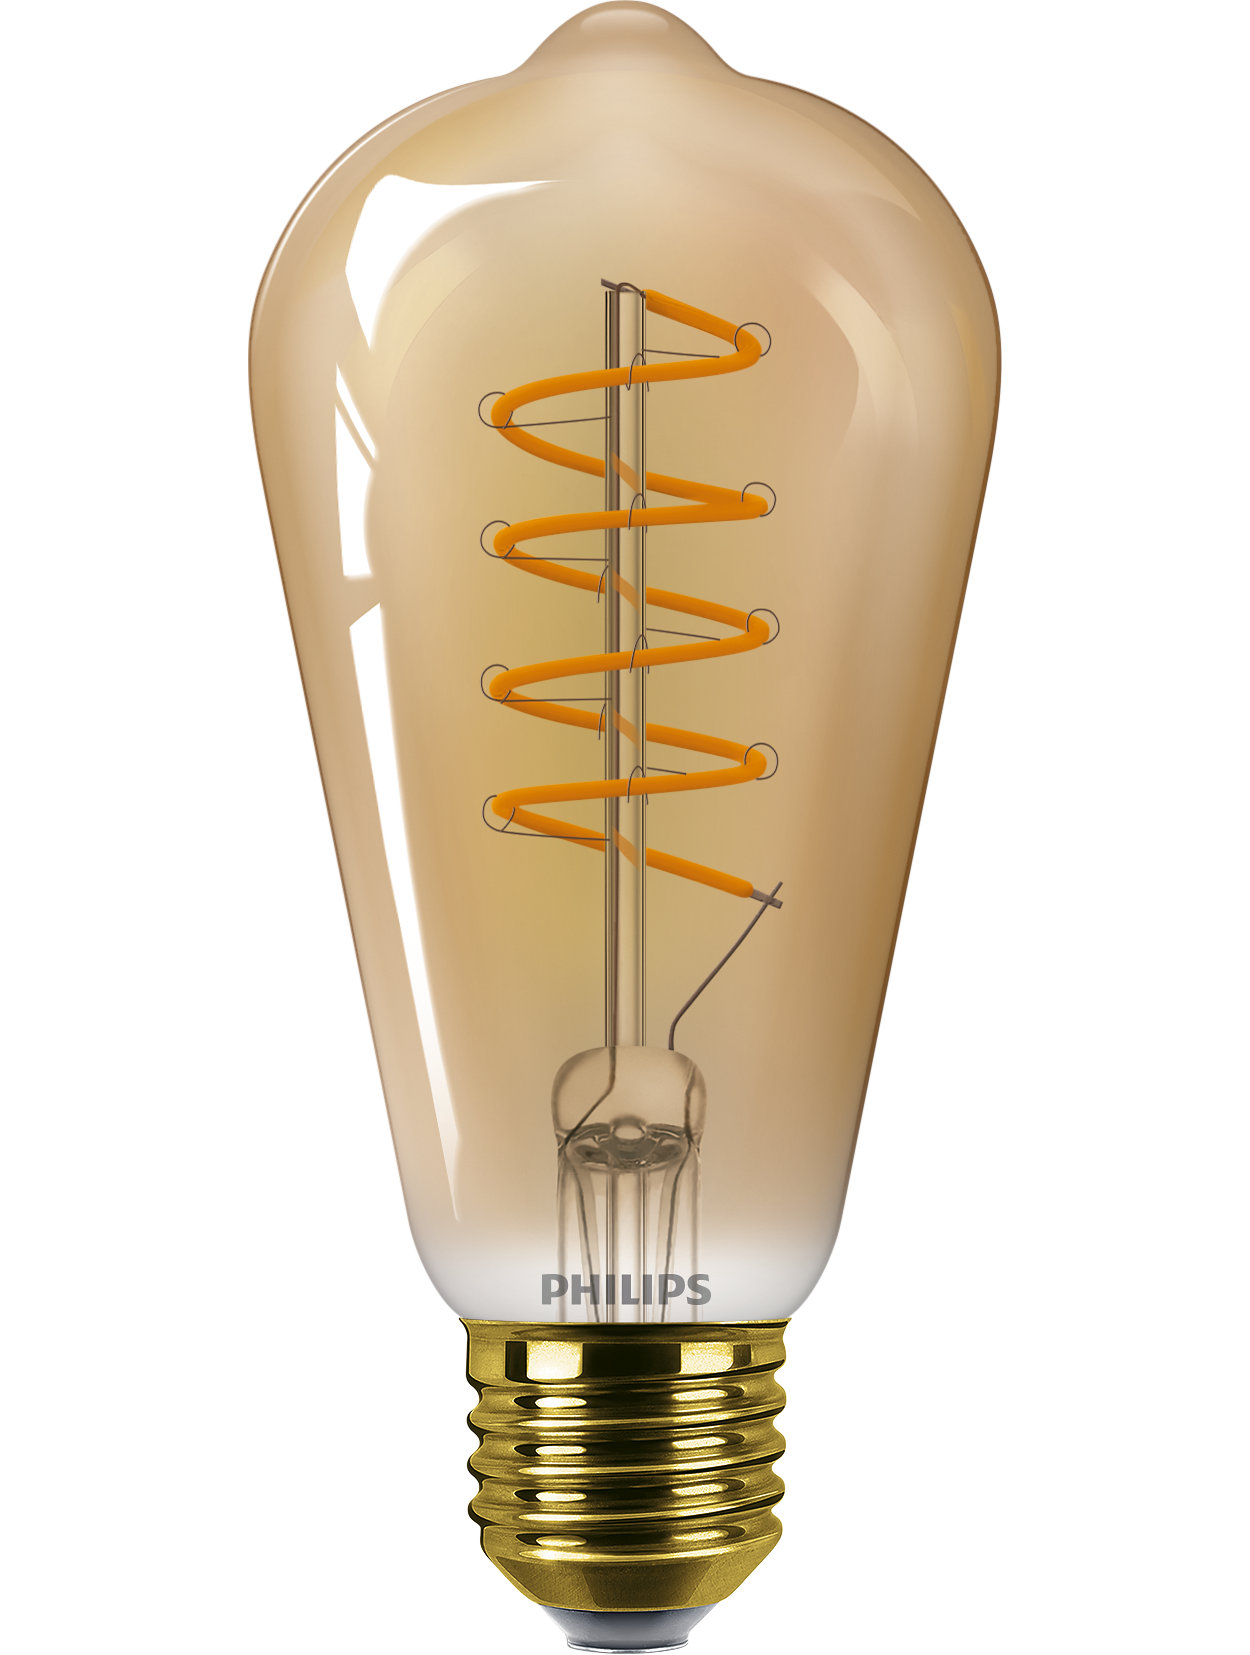 Classic LEDbulbs lamps for decorative lighting